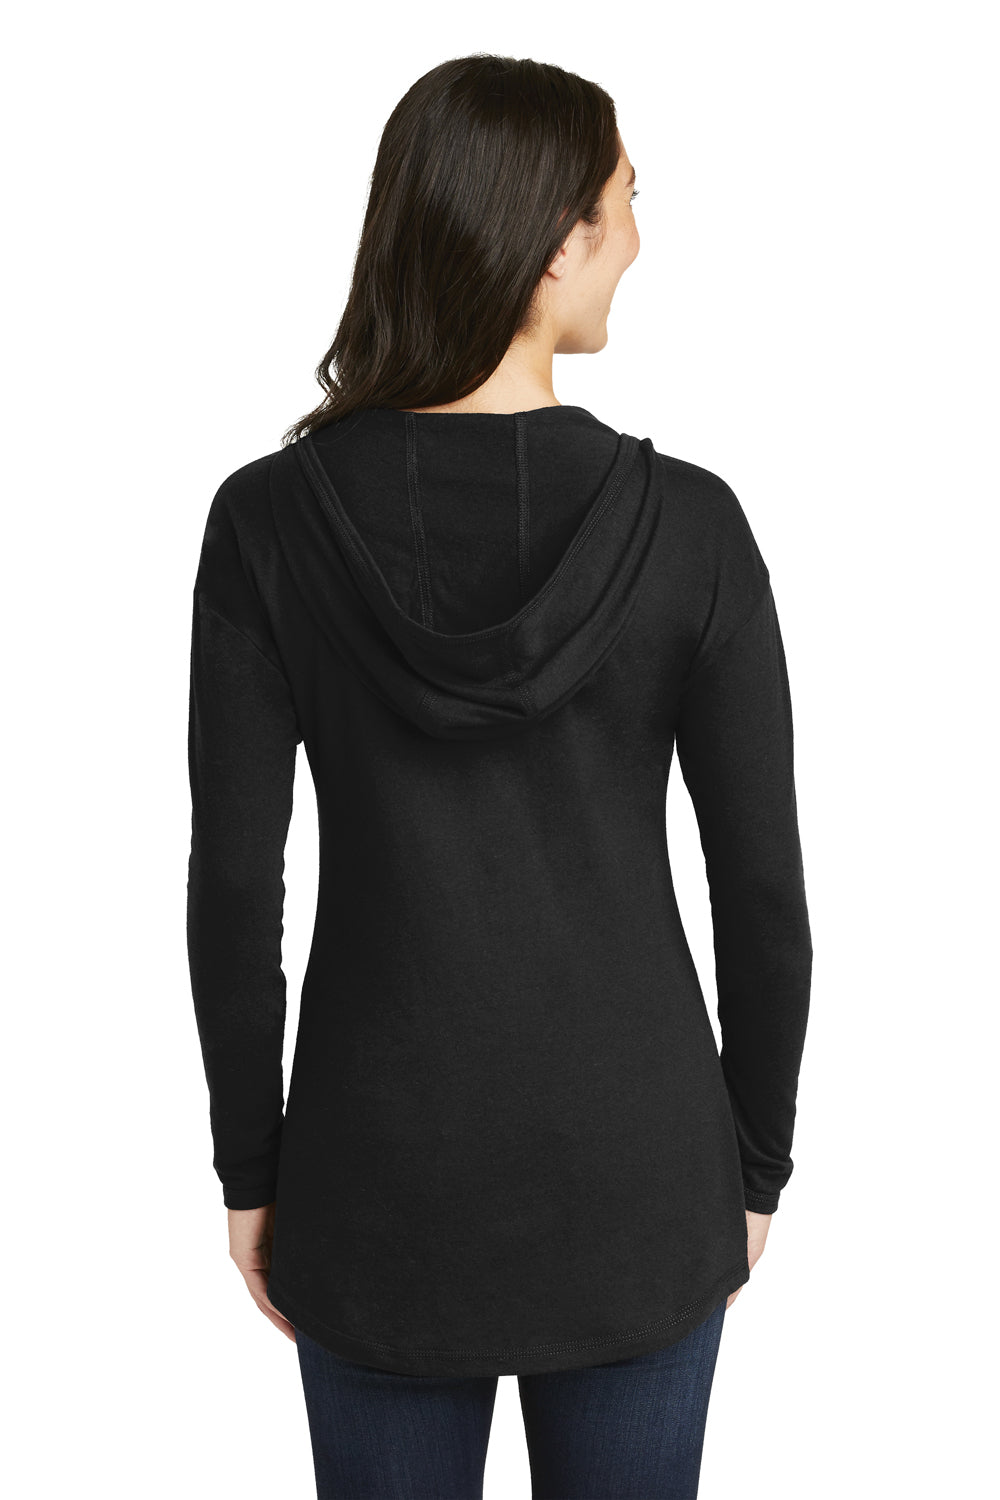 New Era LNEA131 Womens Performance Moisture Wicking Long Sleeve Hooded T-Shirt Hoodie Black Back